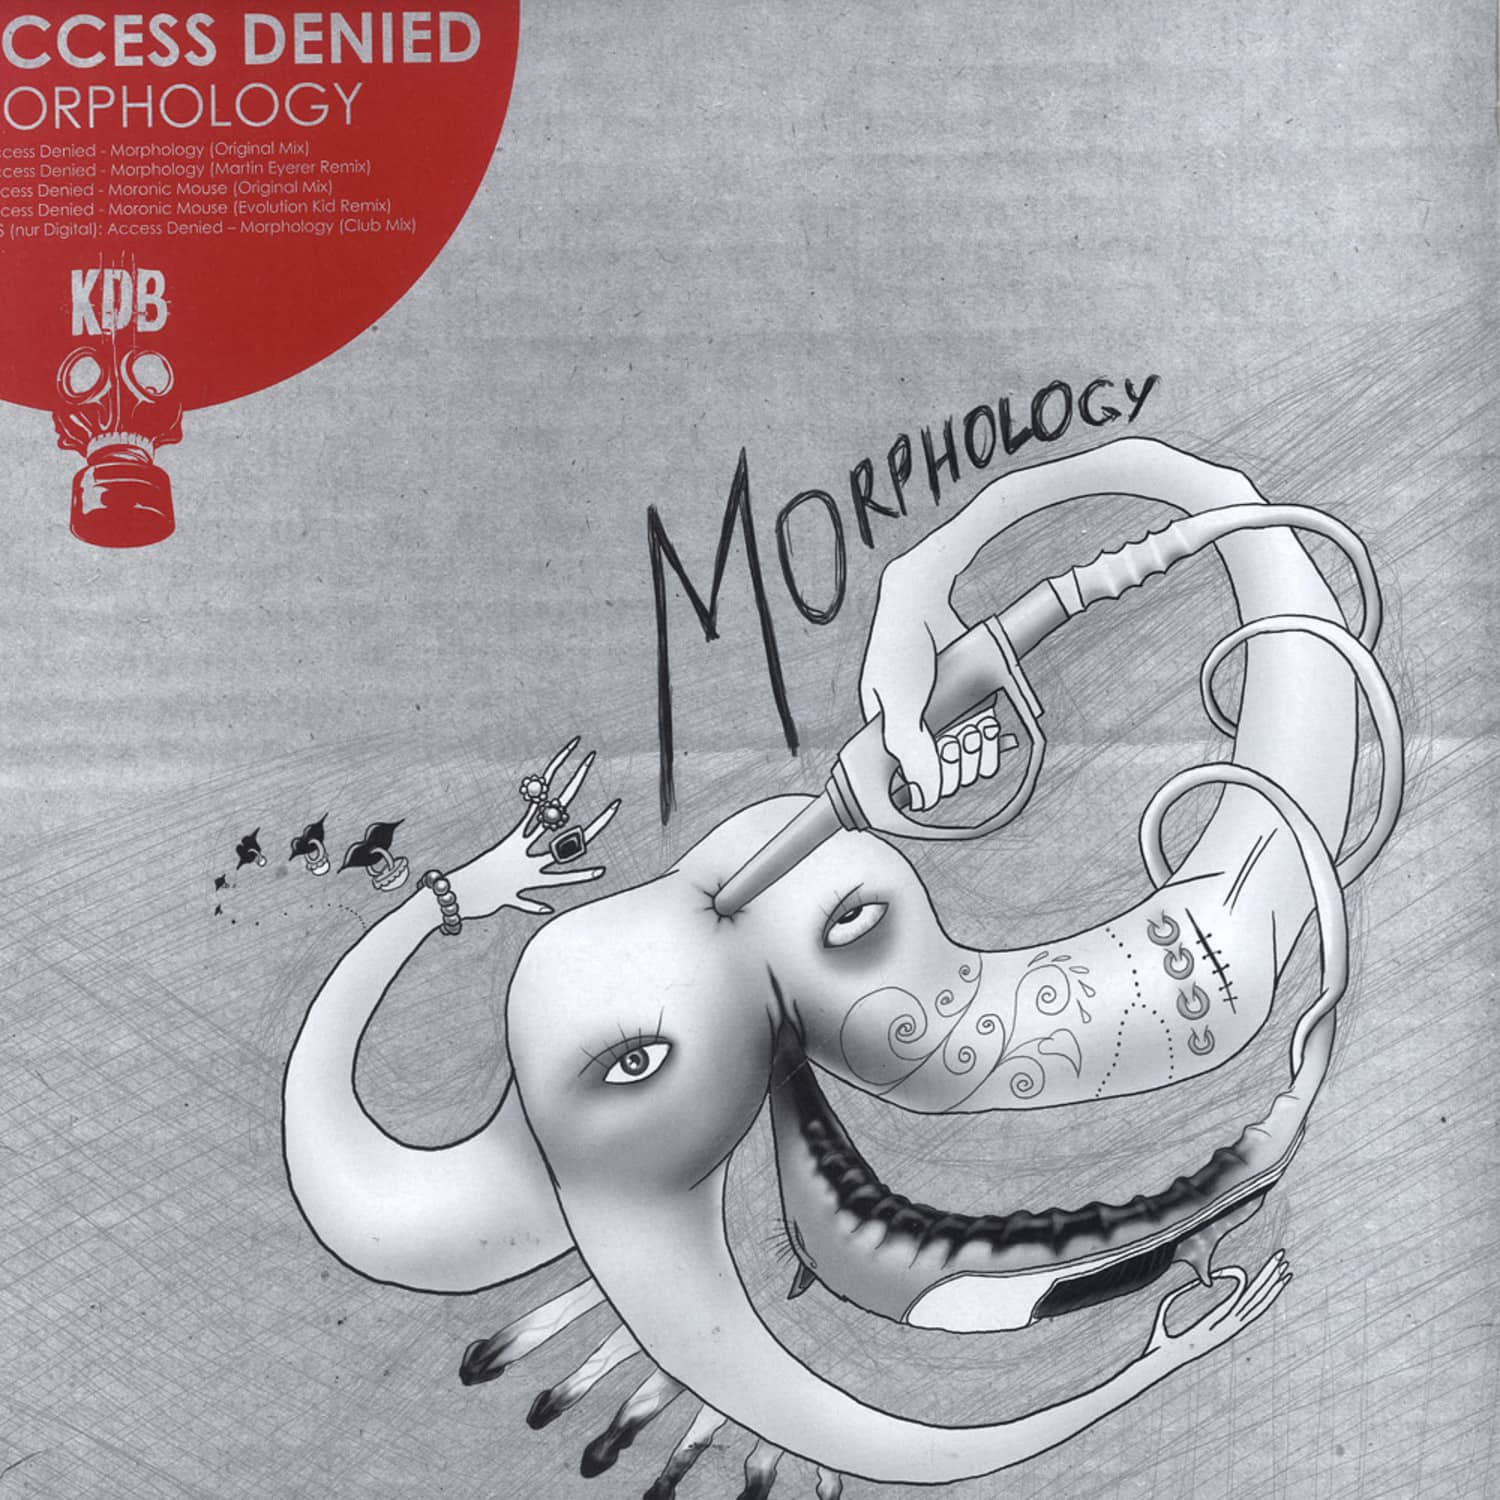 Access Denied - MORPHOLOGY